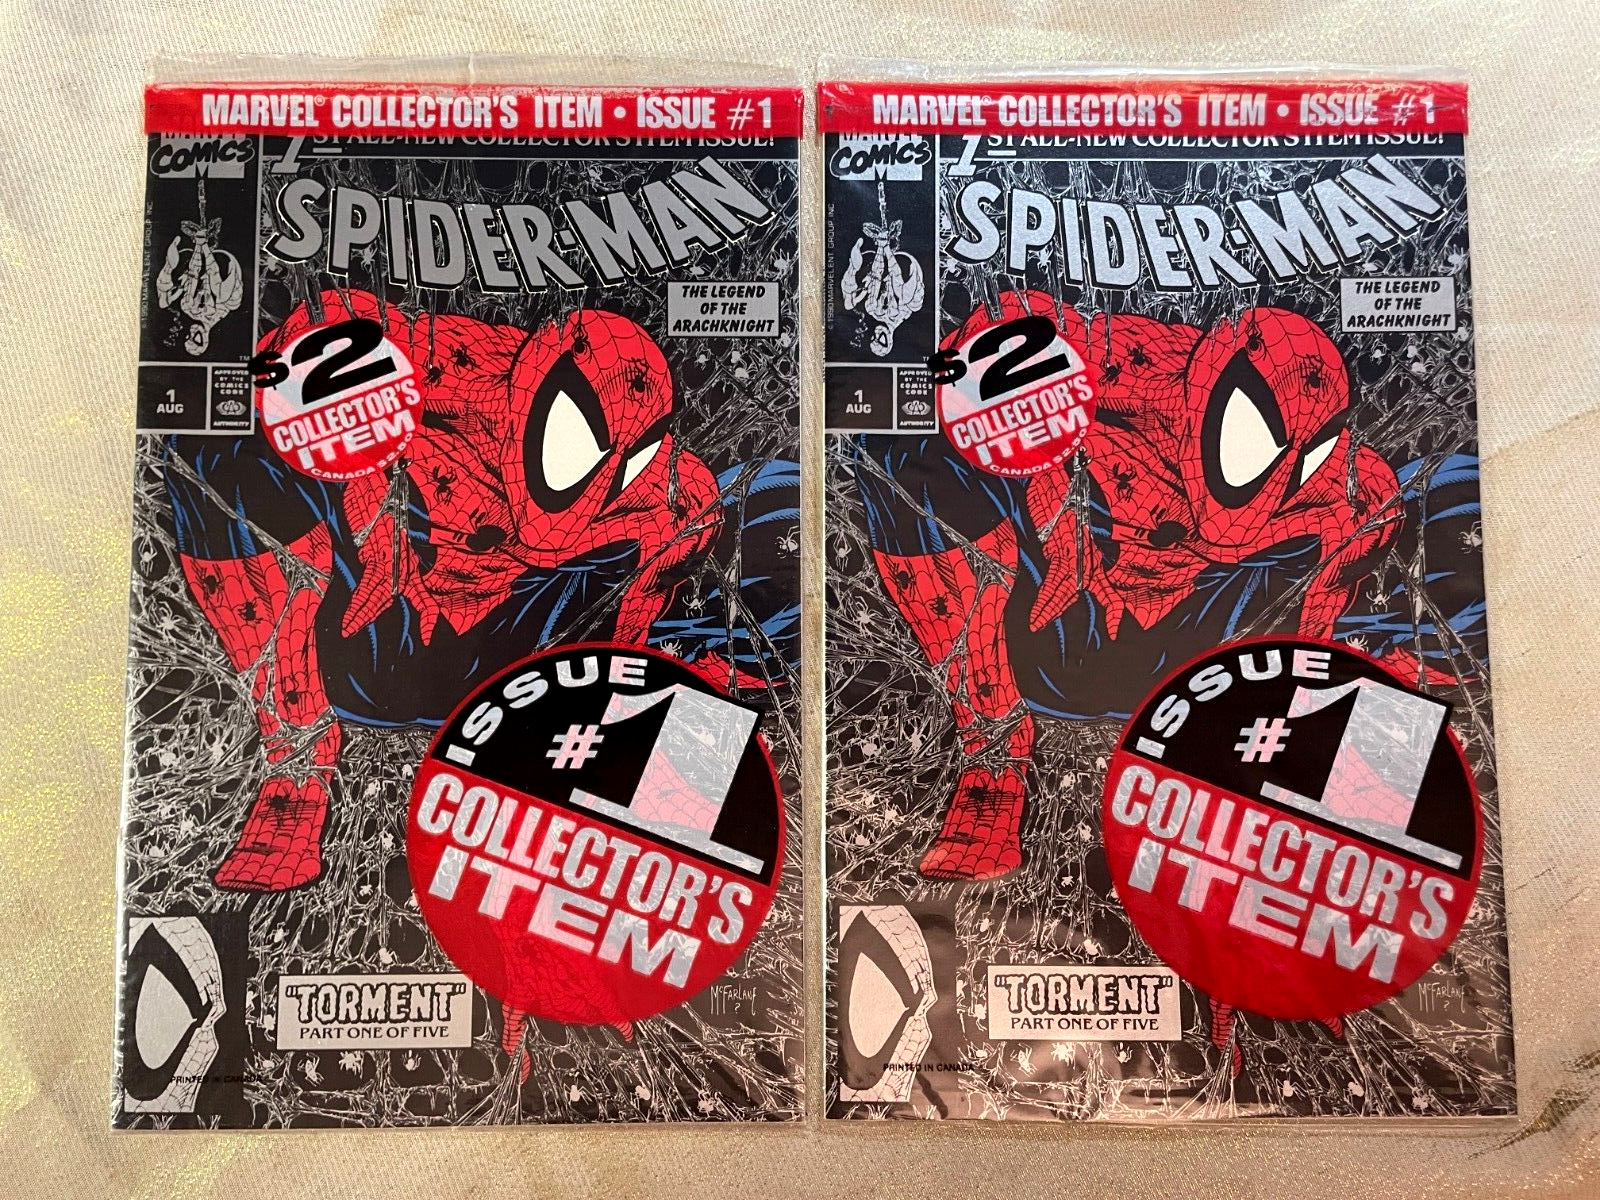 1 copy -----Spider-Man #1 / Silver Sealed BAGGED Edition / 1990 / Todd McFarlane